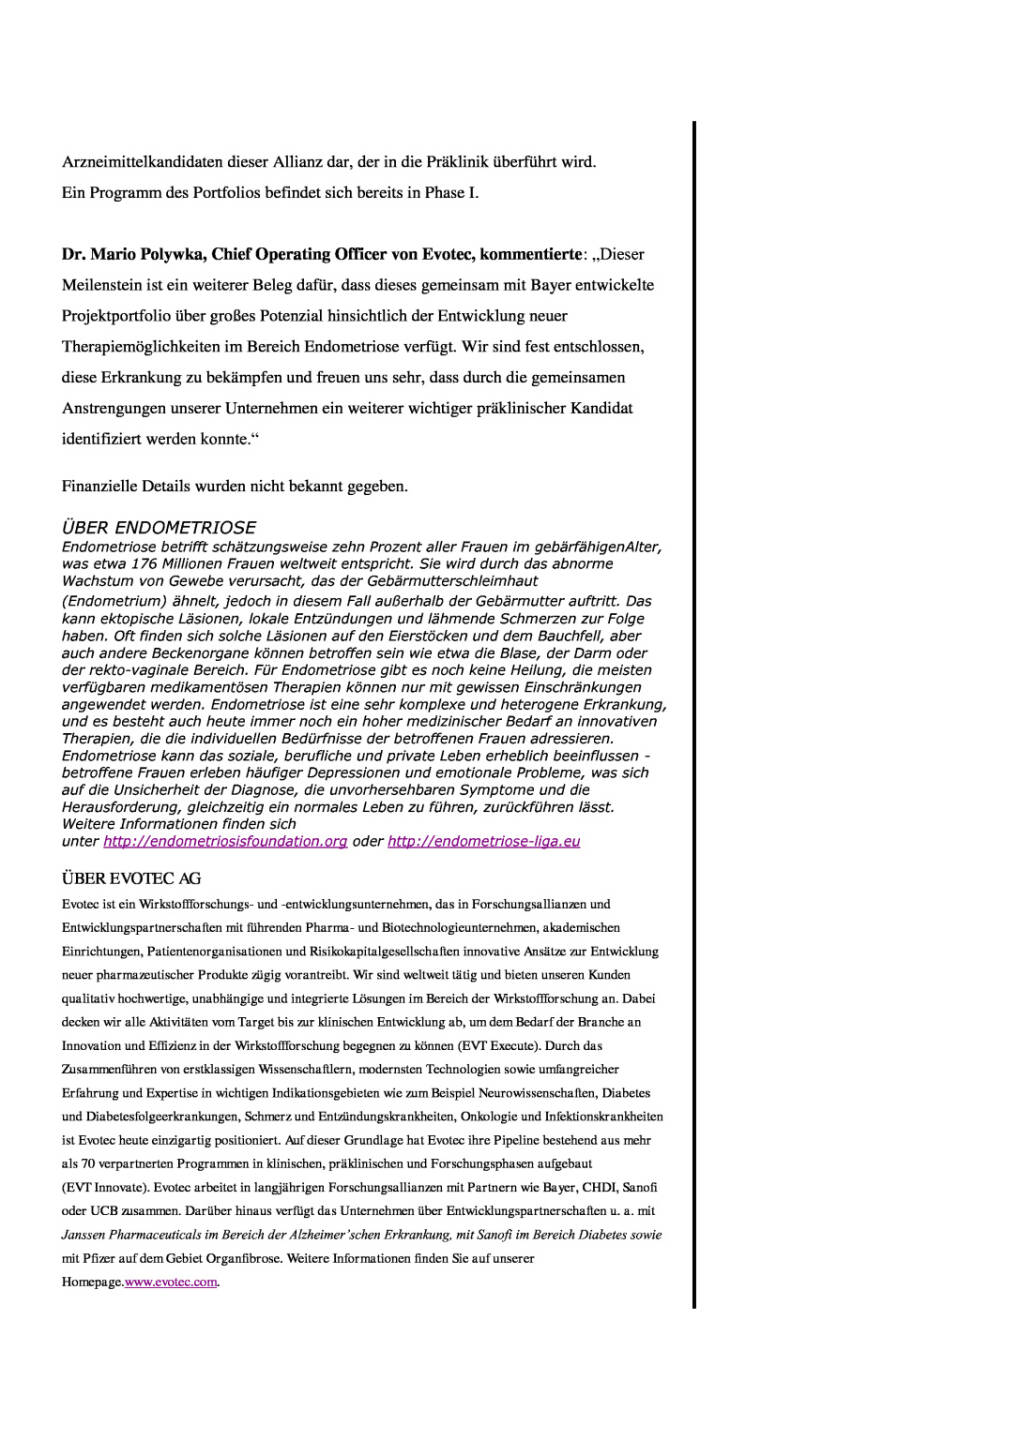 Evotec: Meilenstein in Endometriose-Allianz mit Bayer, Seite 2/3, komplettes Dokument unter http://boerse-social.com/static/uploads/file_1844_evotec_meilenstein_in_endometriose-allianz_mit_bayer.pdf